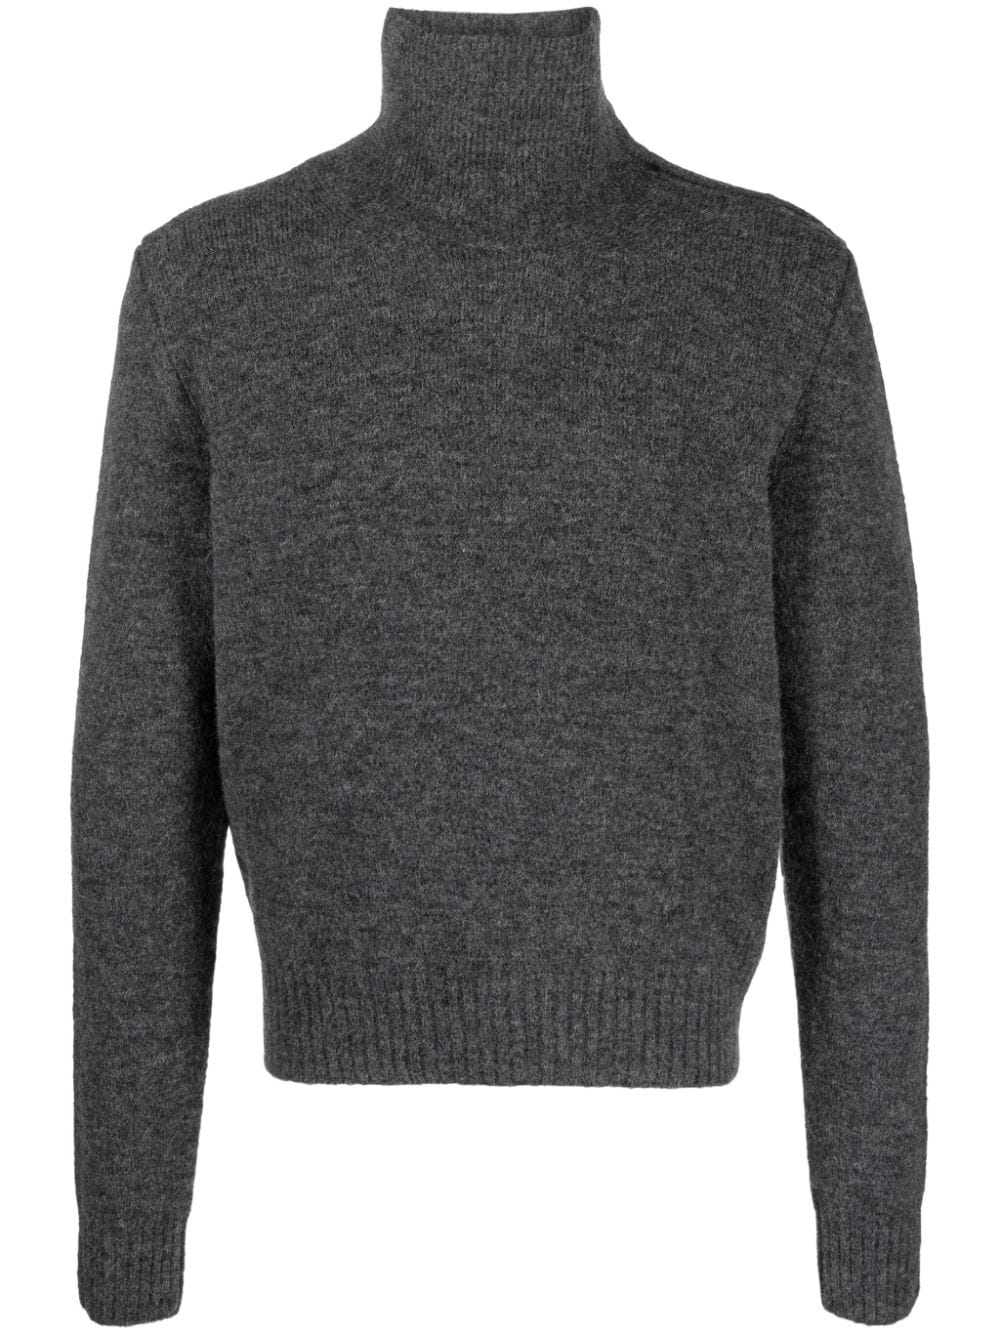 MARANT mélange-effect knitted jumper - Grey von MARANT